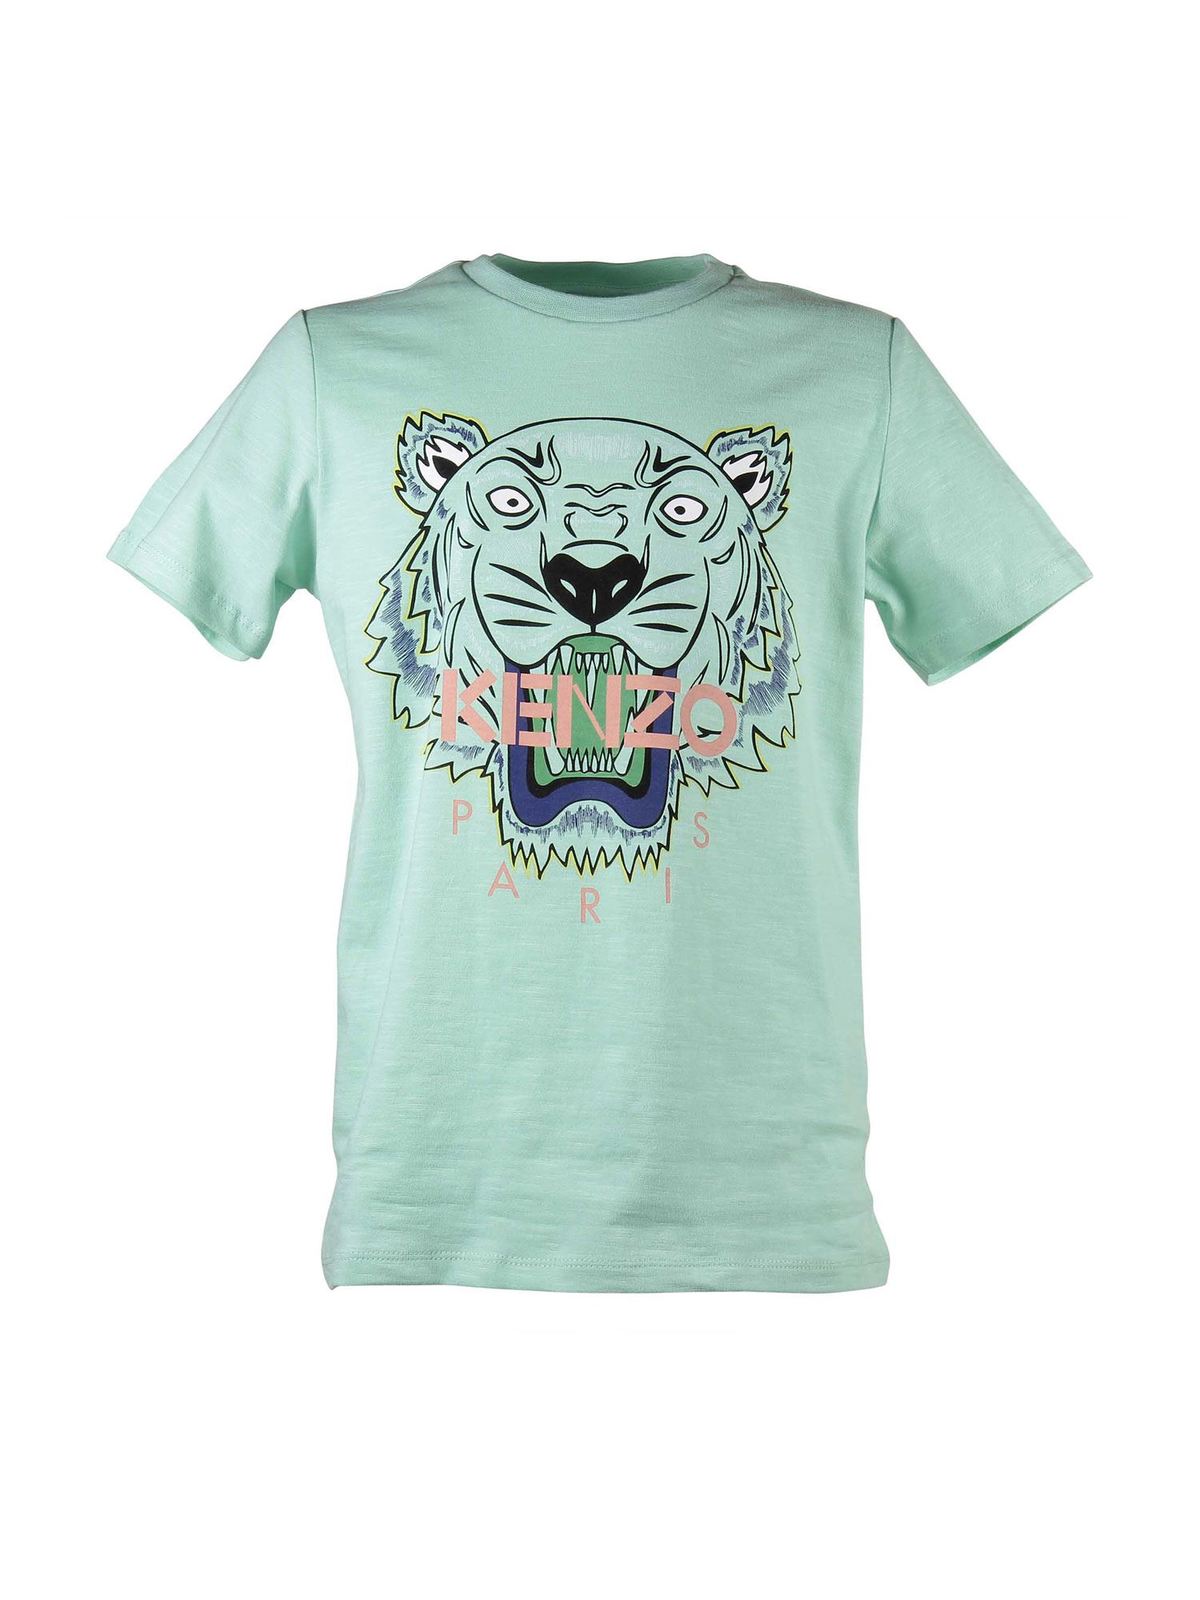 T-shirt Tiger in mint green